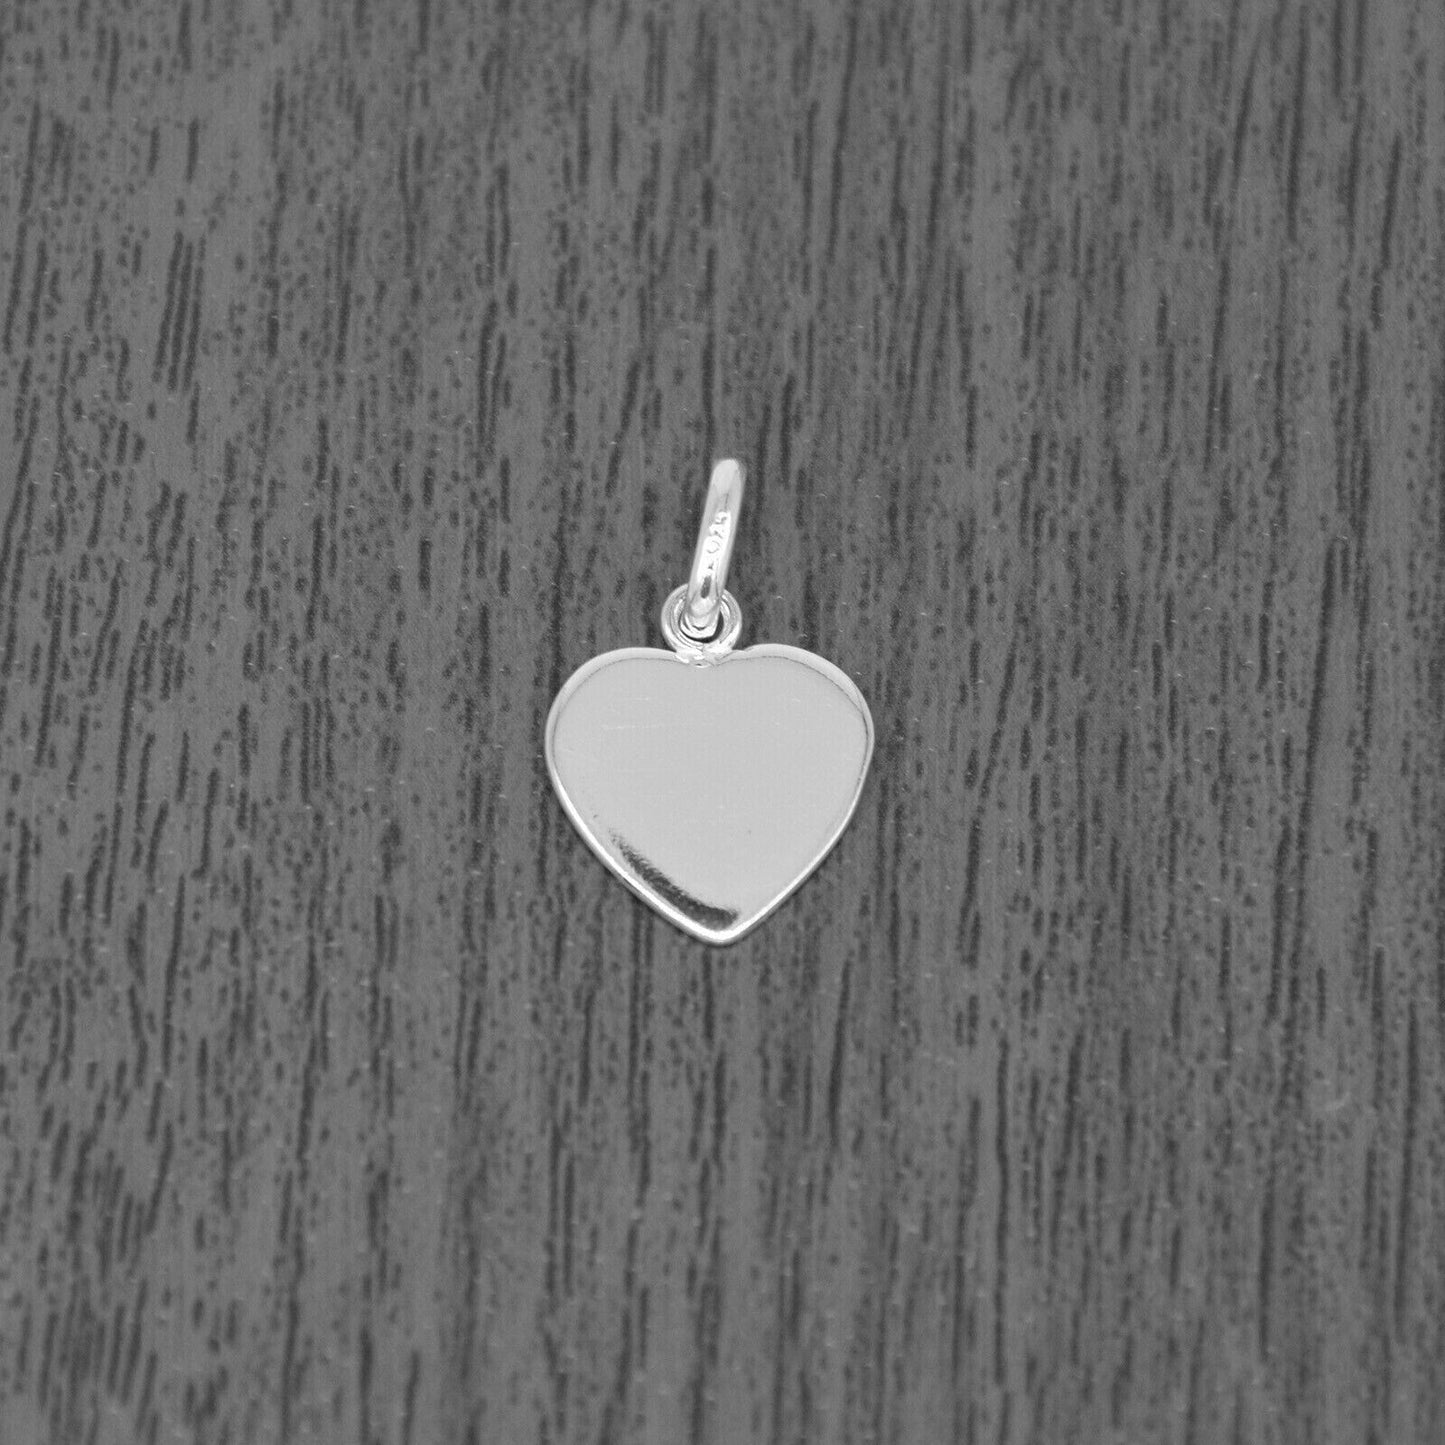 Genuine 925 Sterling Silver Flat Heart Pendant